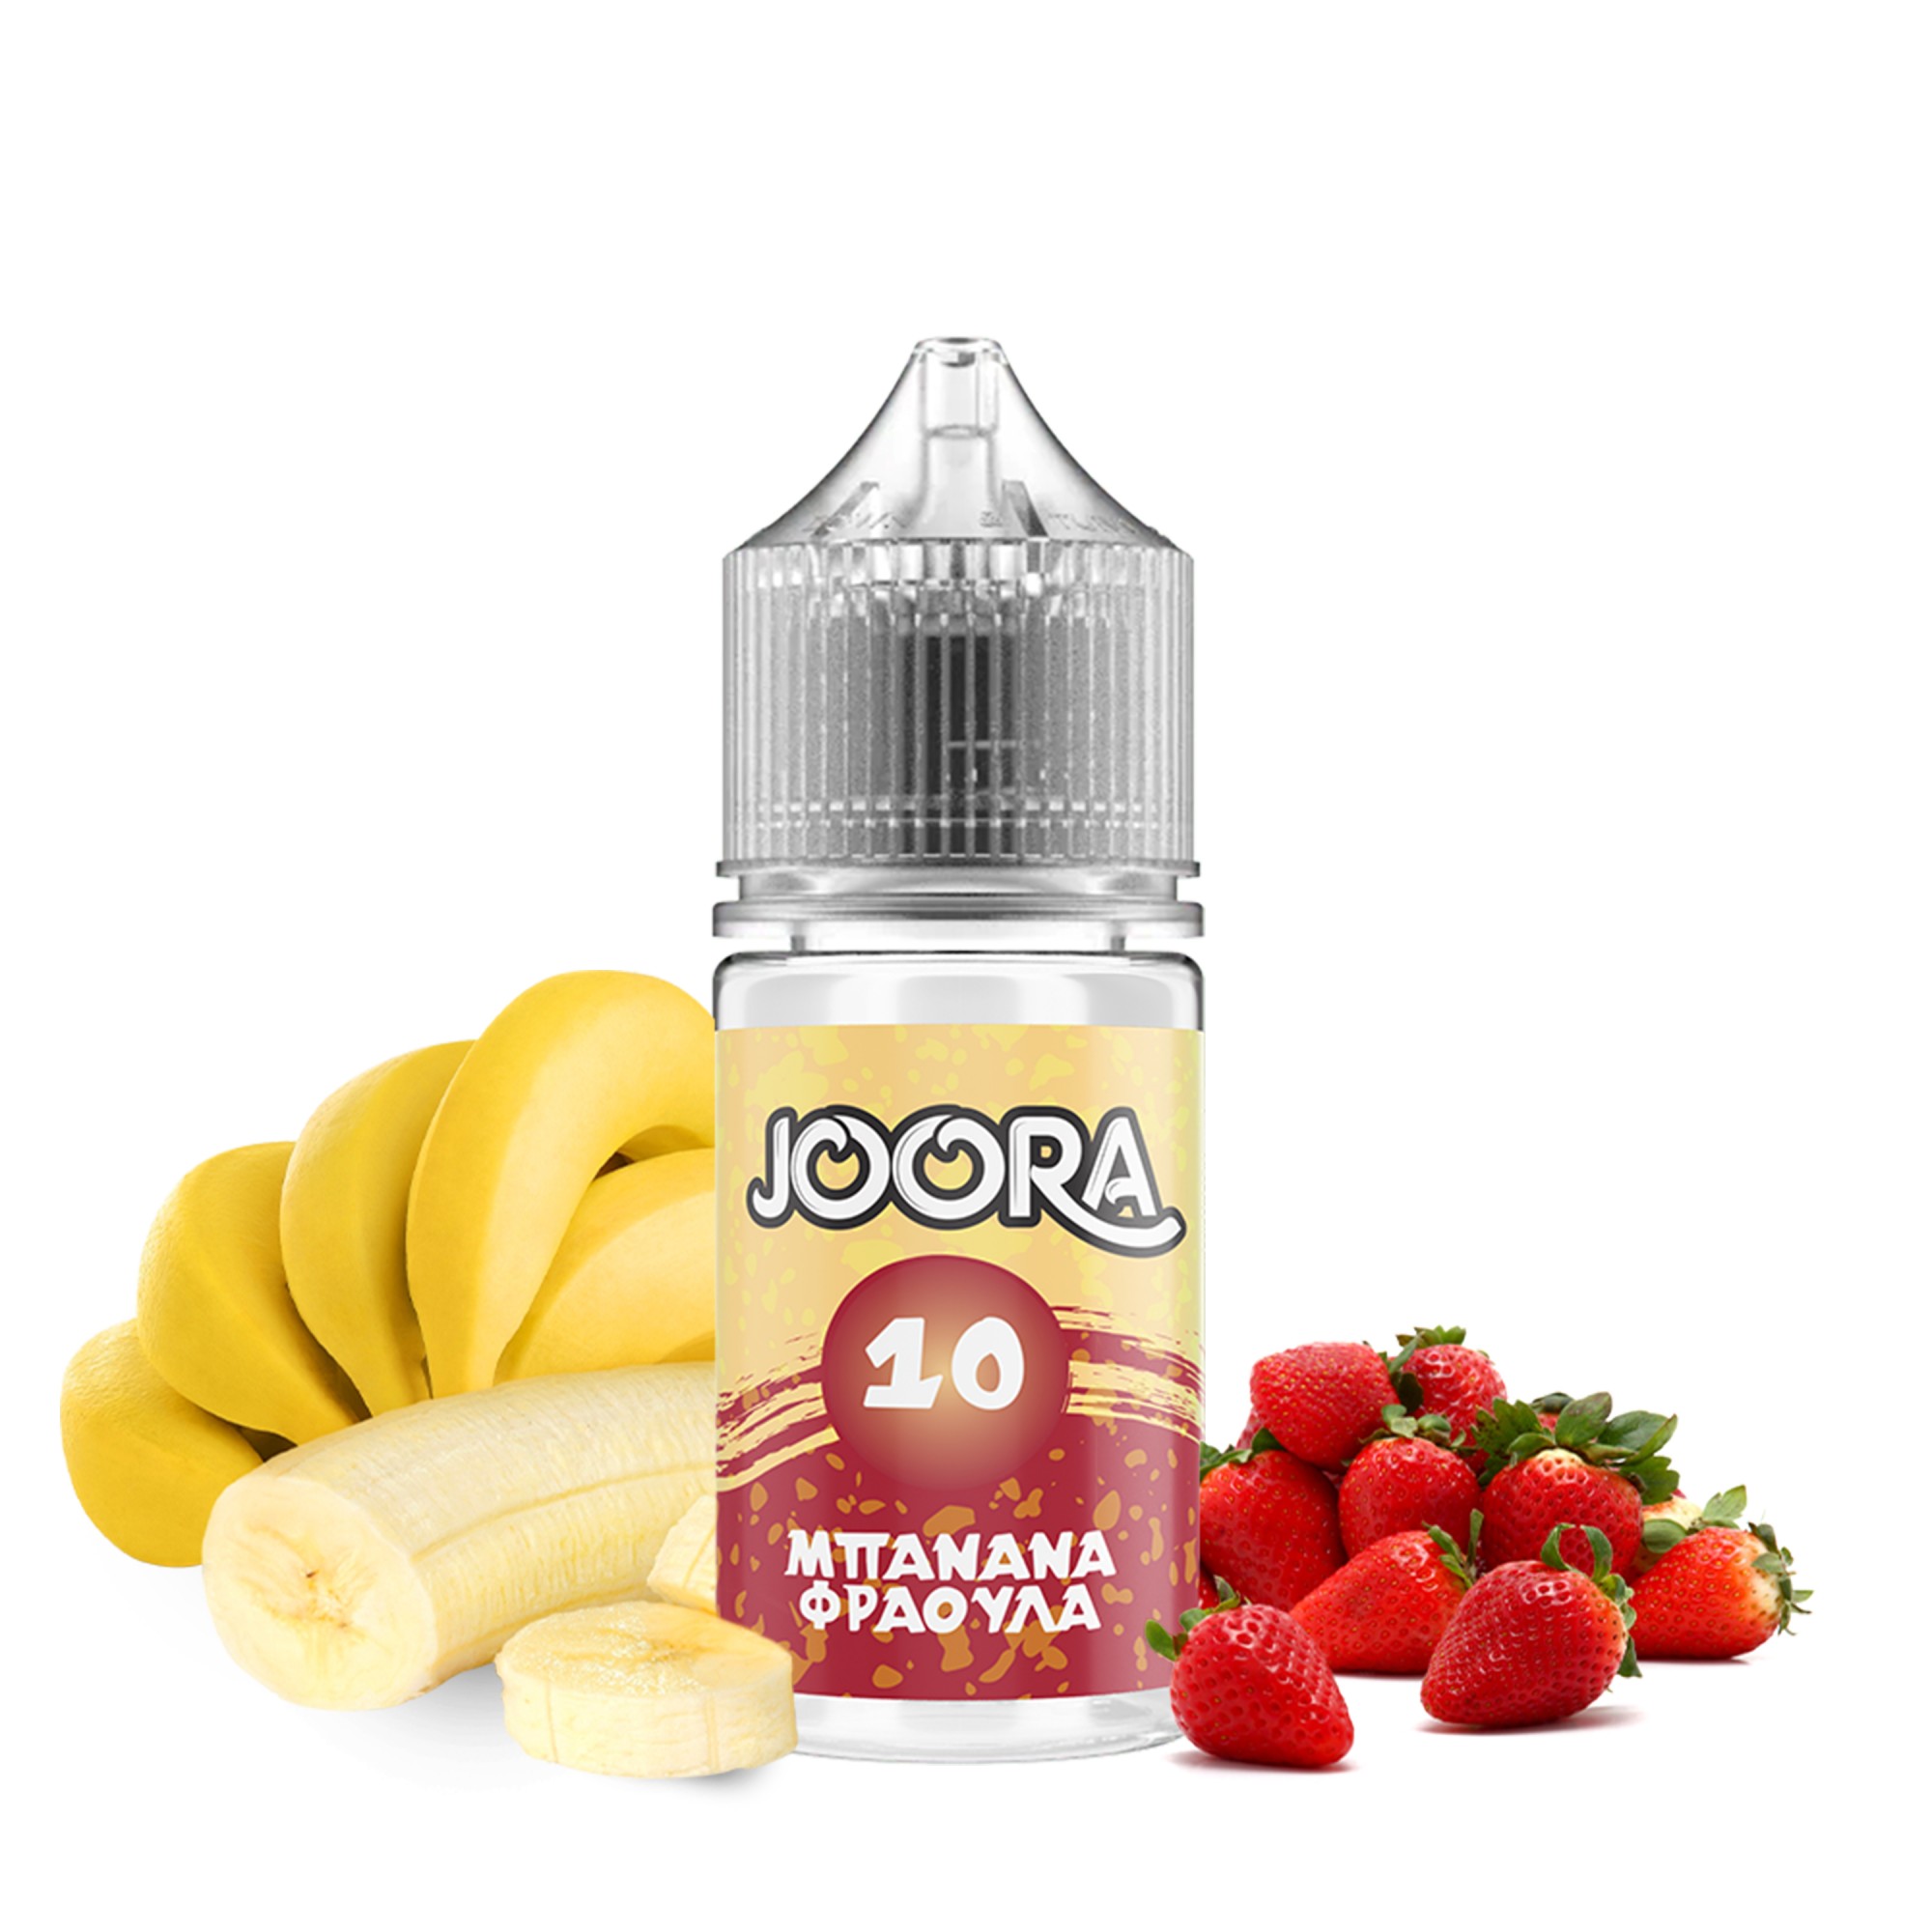 Joora 10 Μπανάνα Φράουλα 30